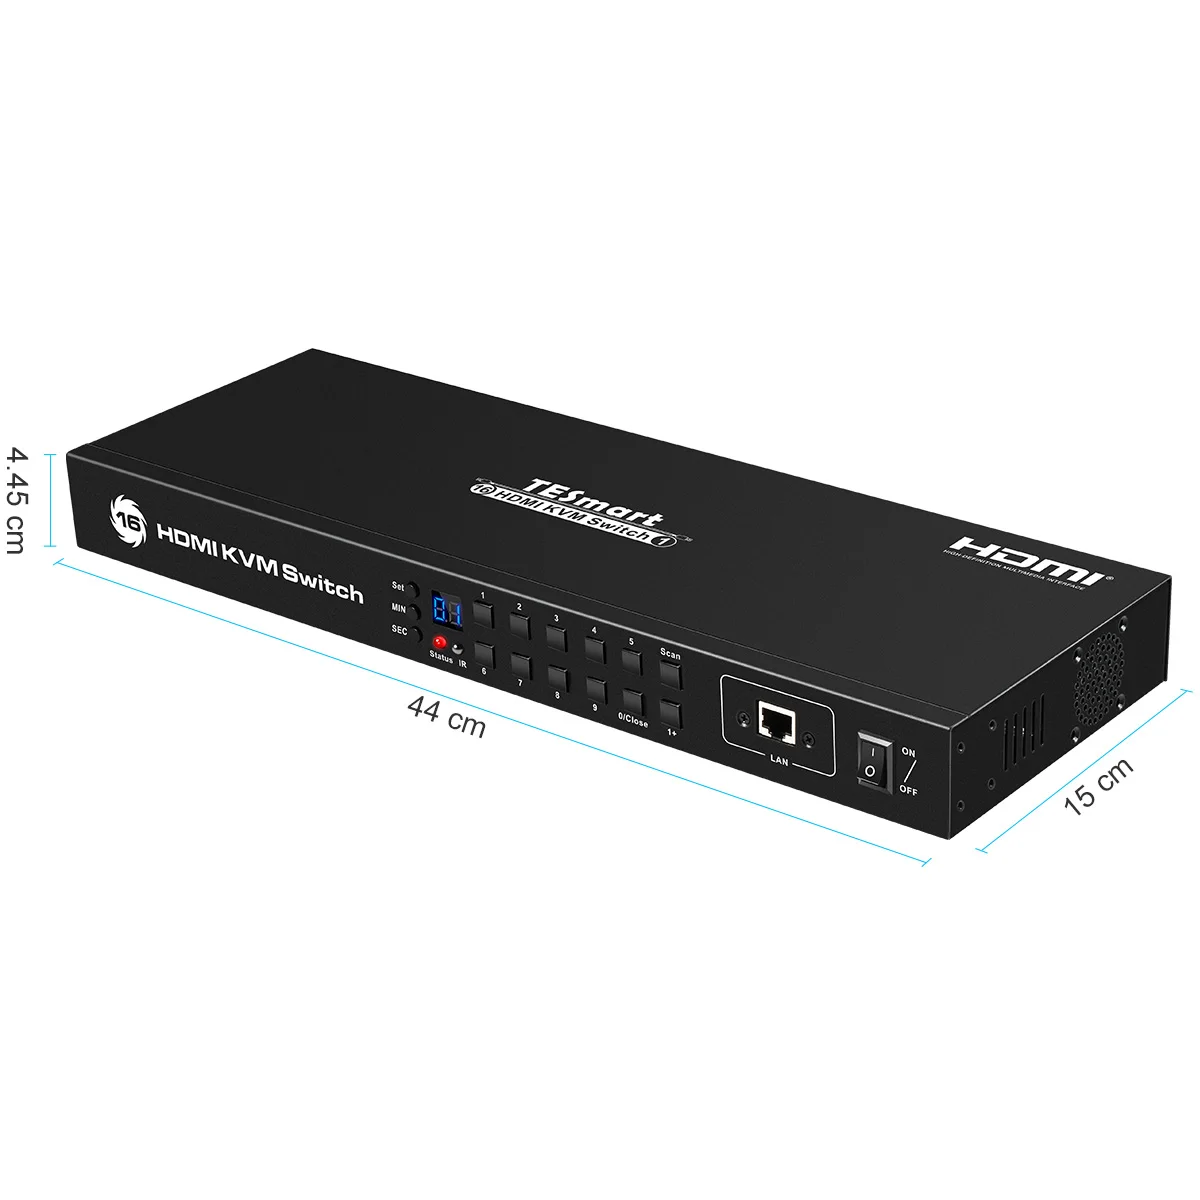 
TESmart USB2.0 16 Port HDMI IP KVM Switch support keyboard hotkeys control 